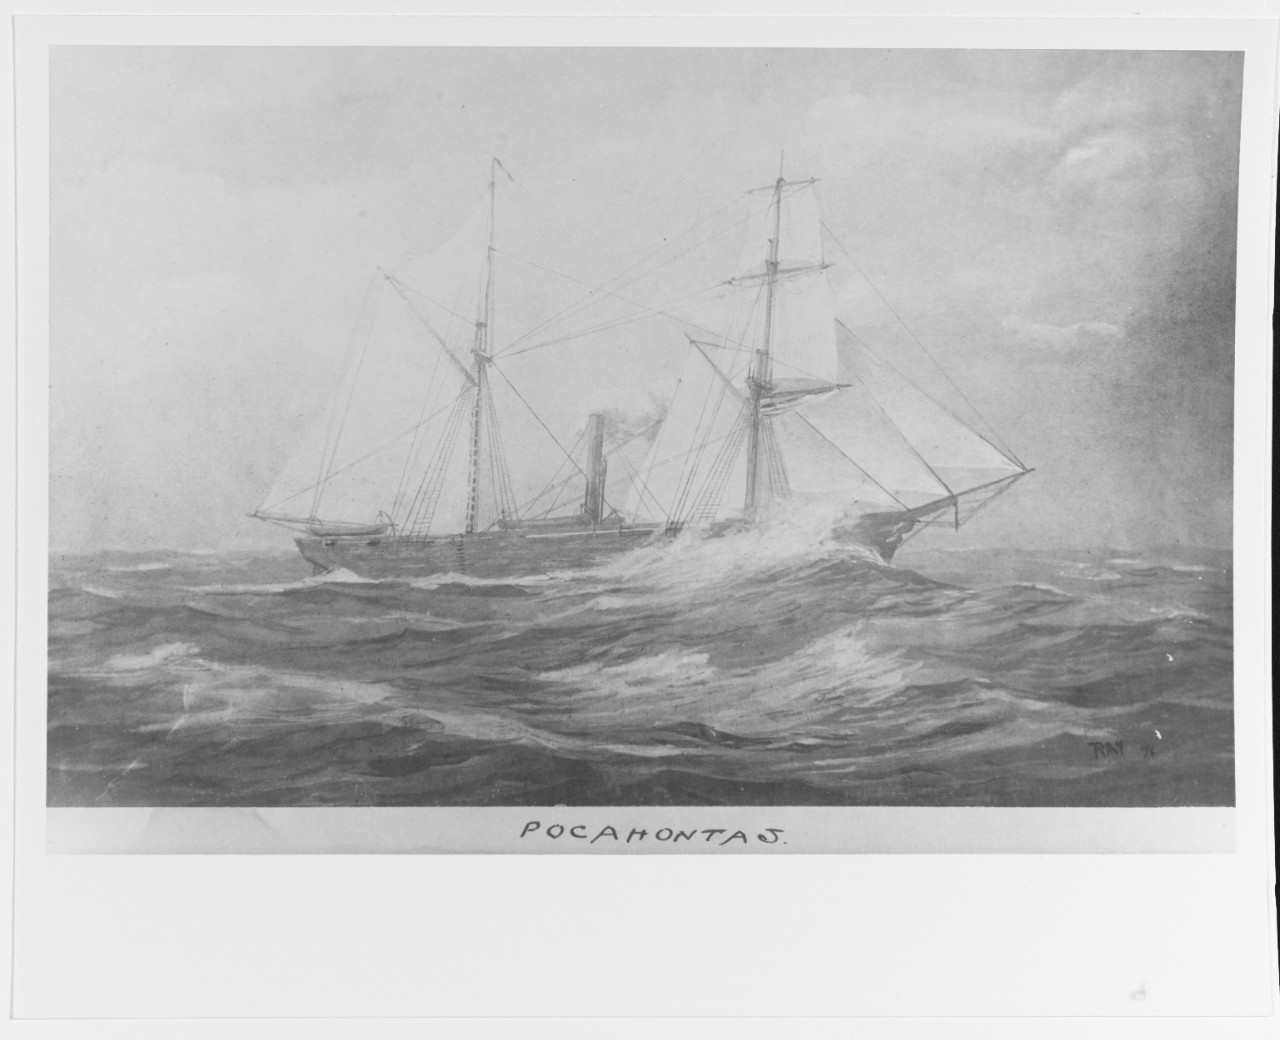 USS POCAHONTAS (1856-1865)